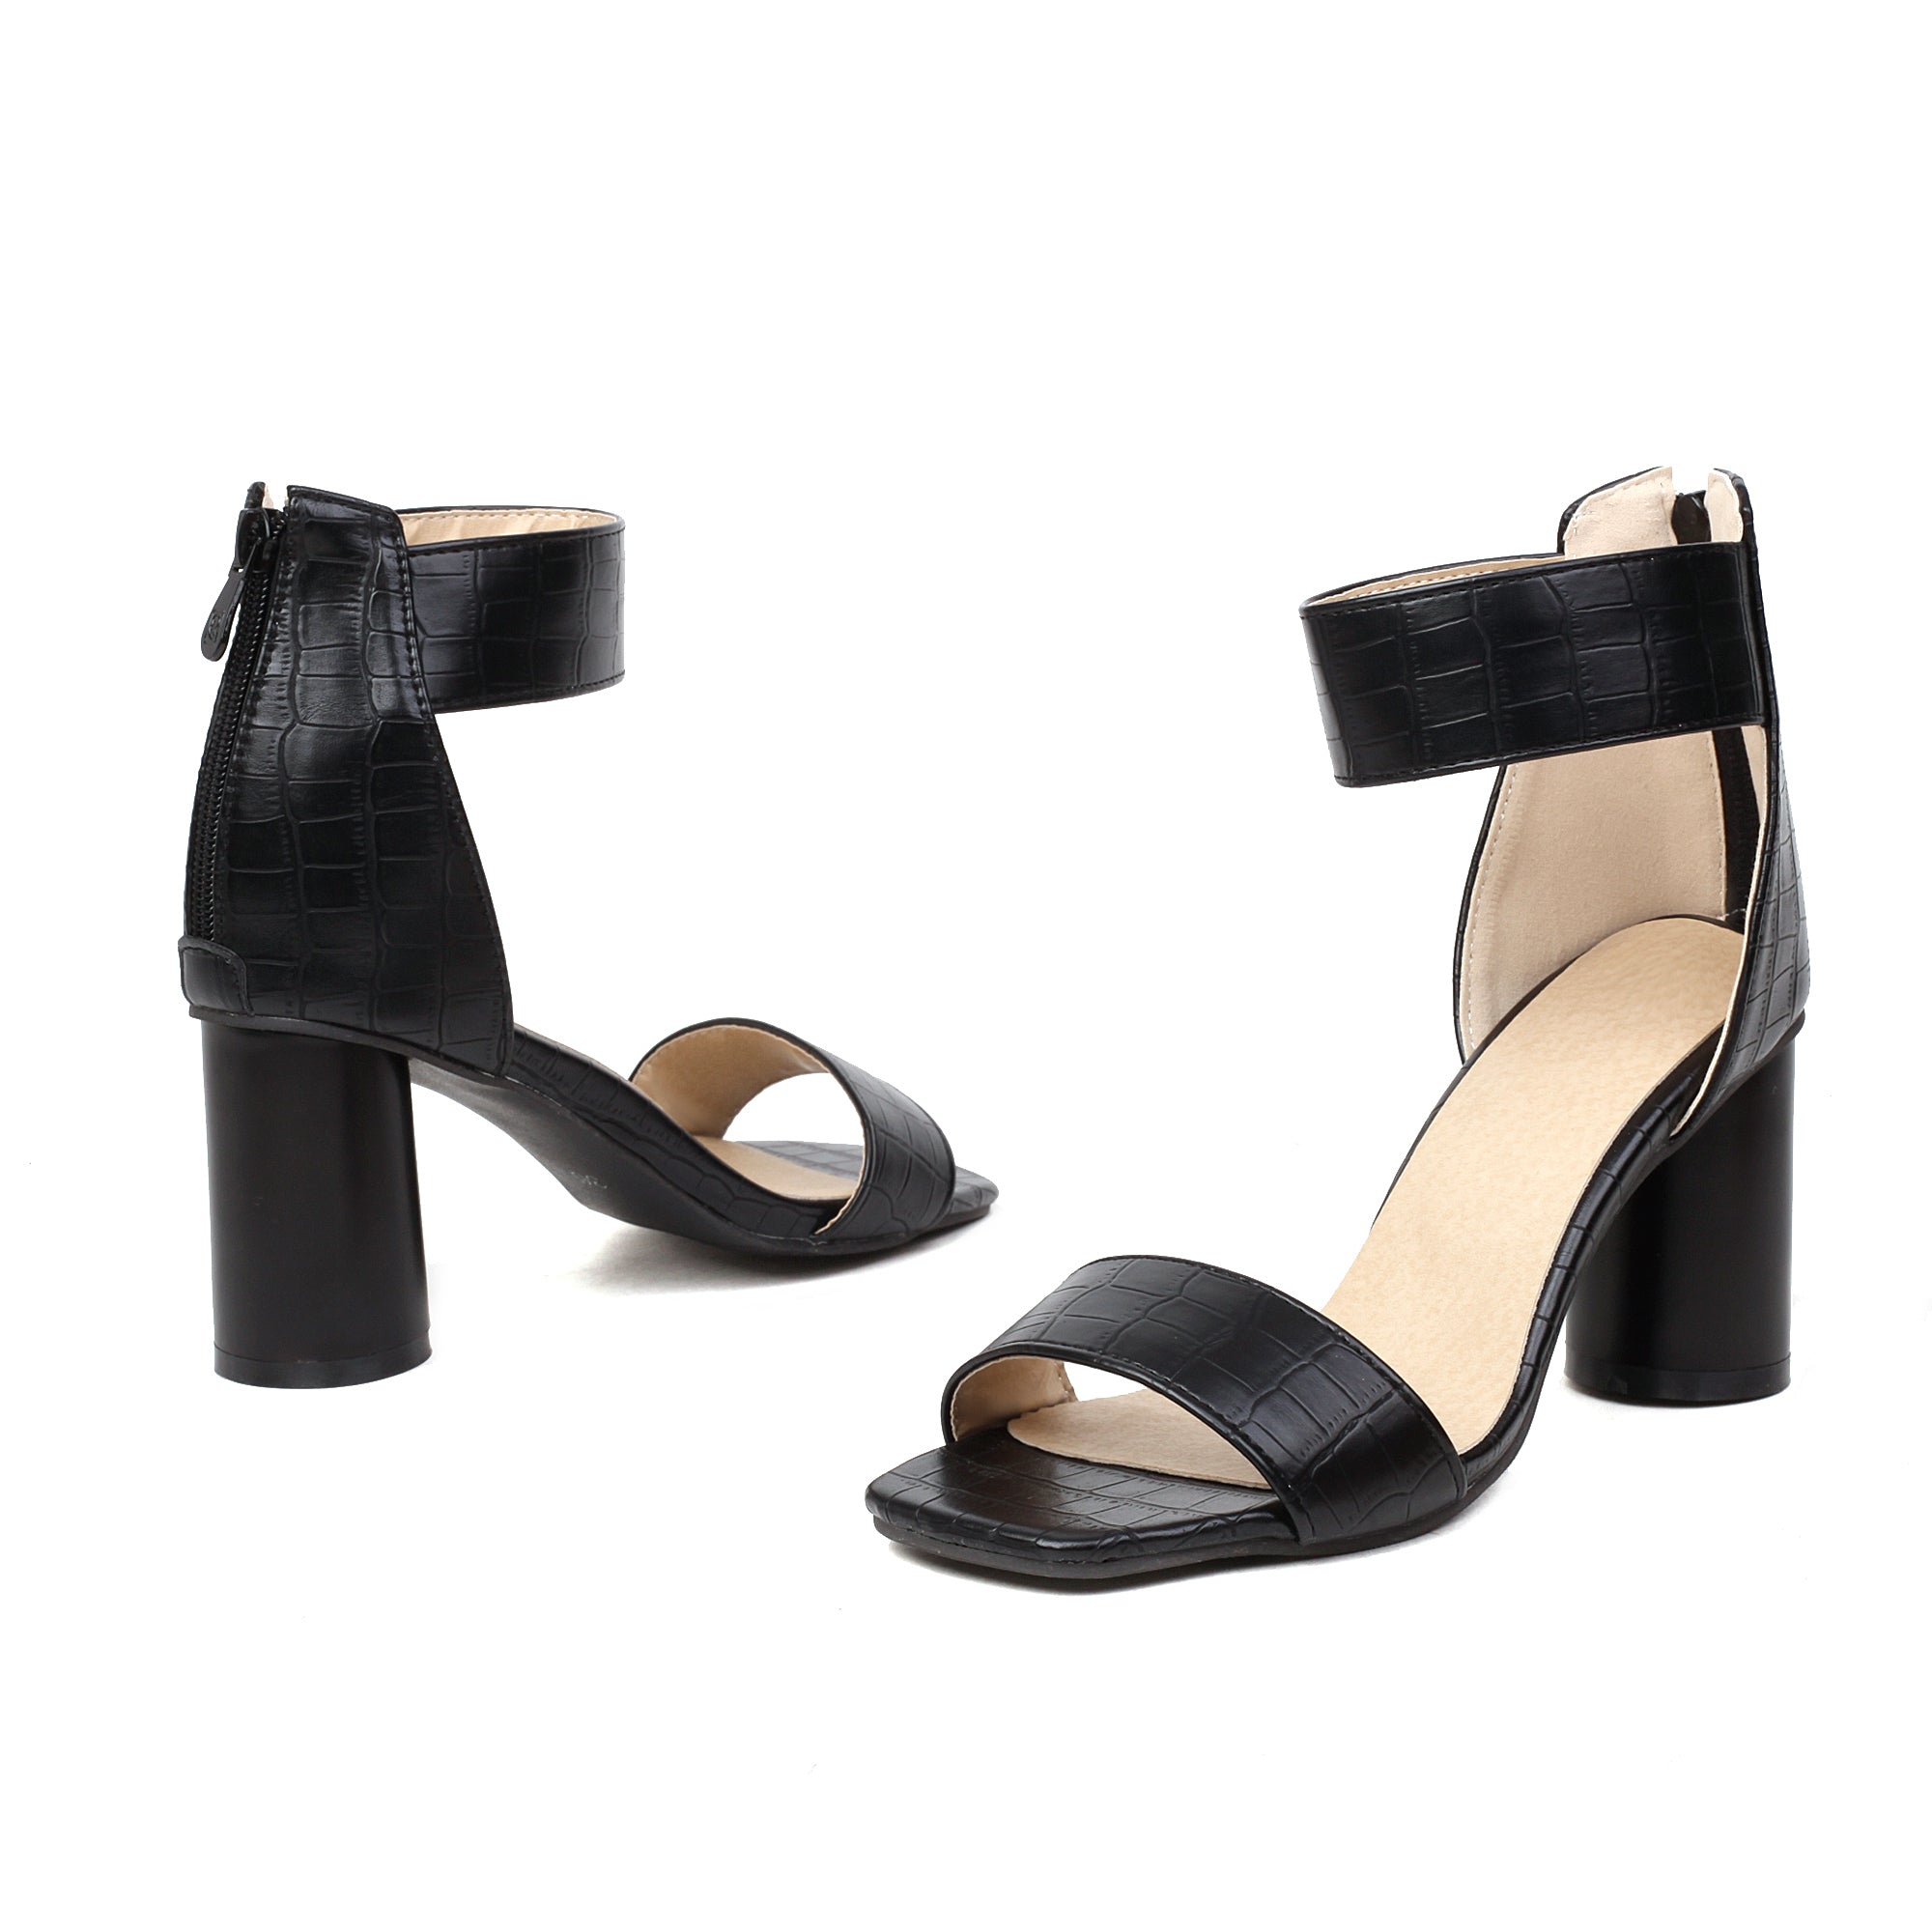 Bigsizeheels Chunky Heel Round Toe T Strap Heels - Black best oversized womens heels are from bigsizeheels®